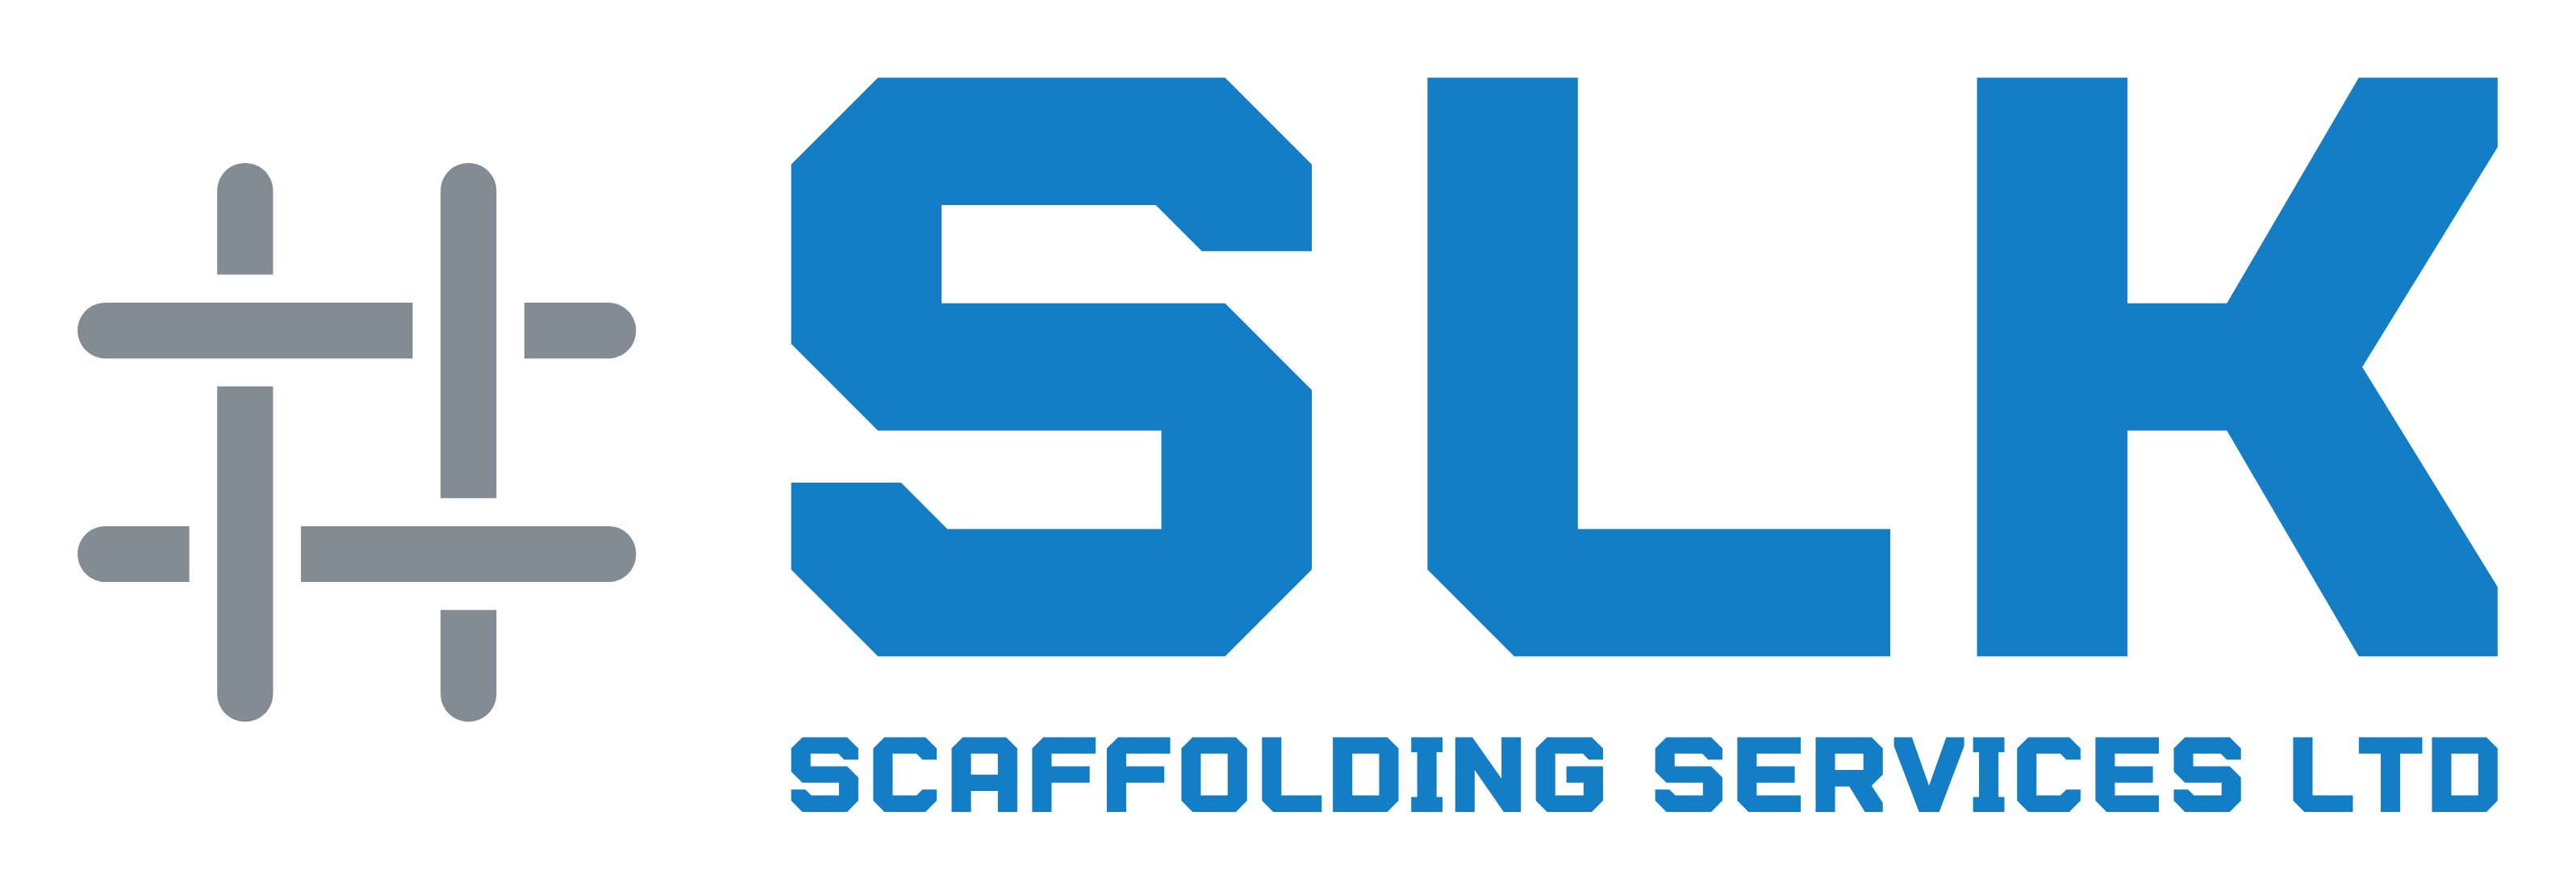 logo for SLK Scaffolding Services Ltd